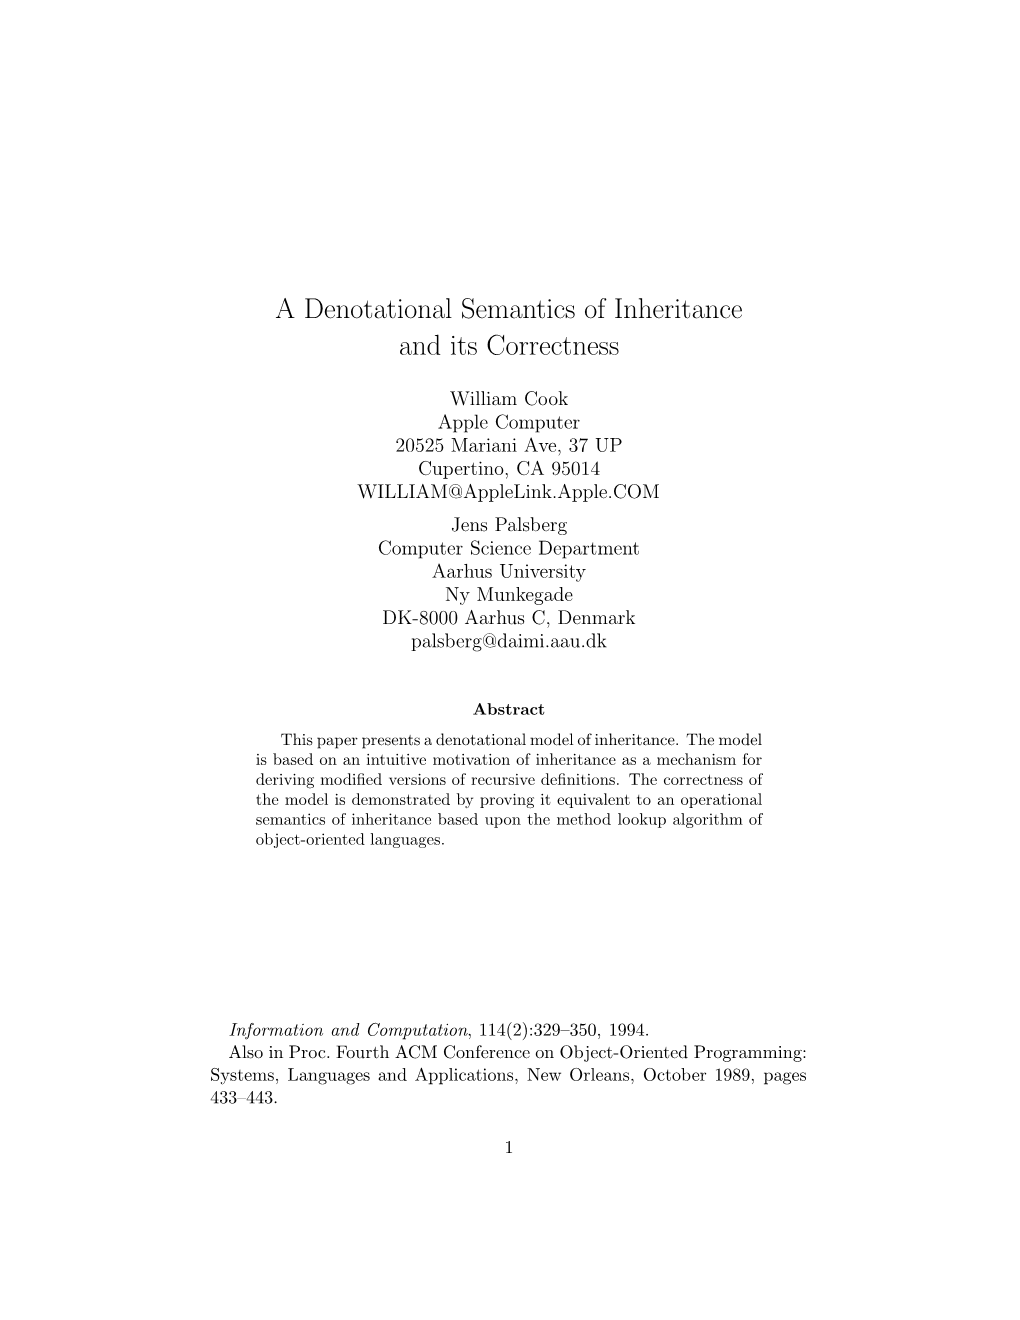 A Denotational Semantics of Inheritance and Its Correctness